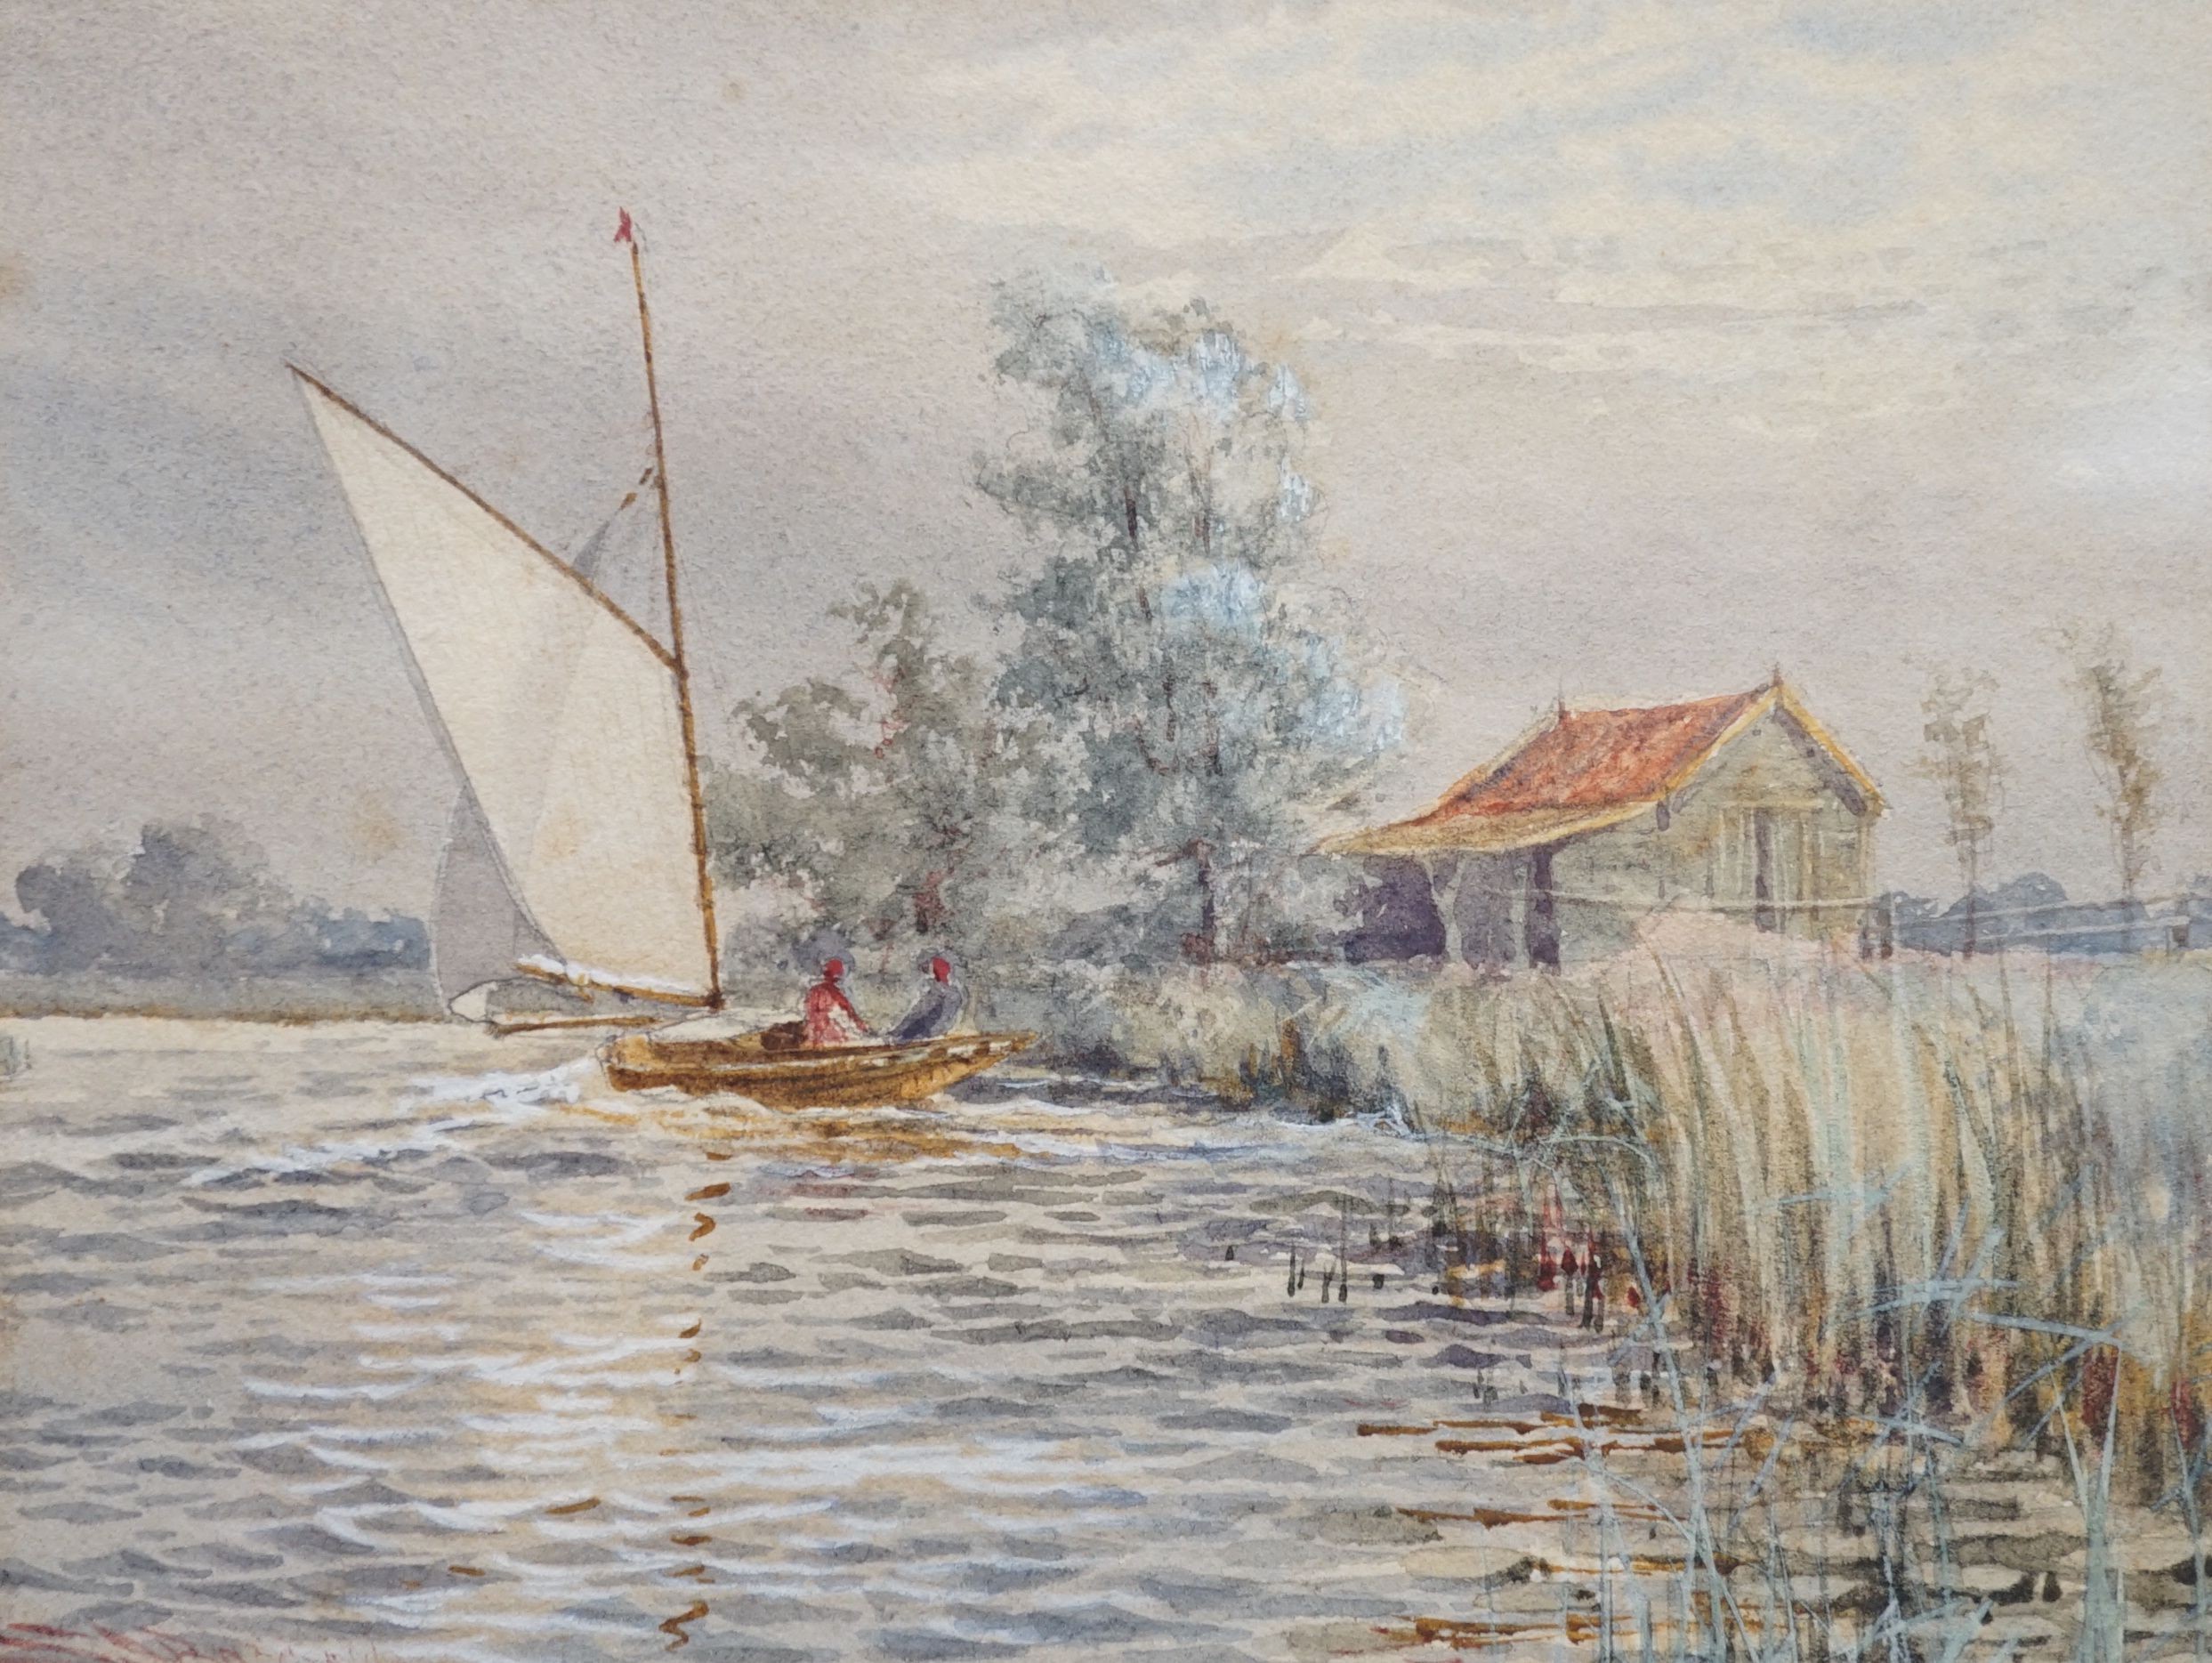 Stephen John Batchelder (1849-1932), Kendal Dyke, River Thurne, watercolour, signed and dated